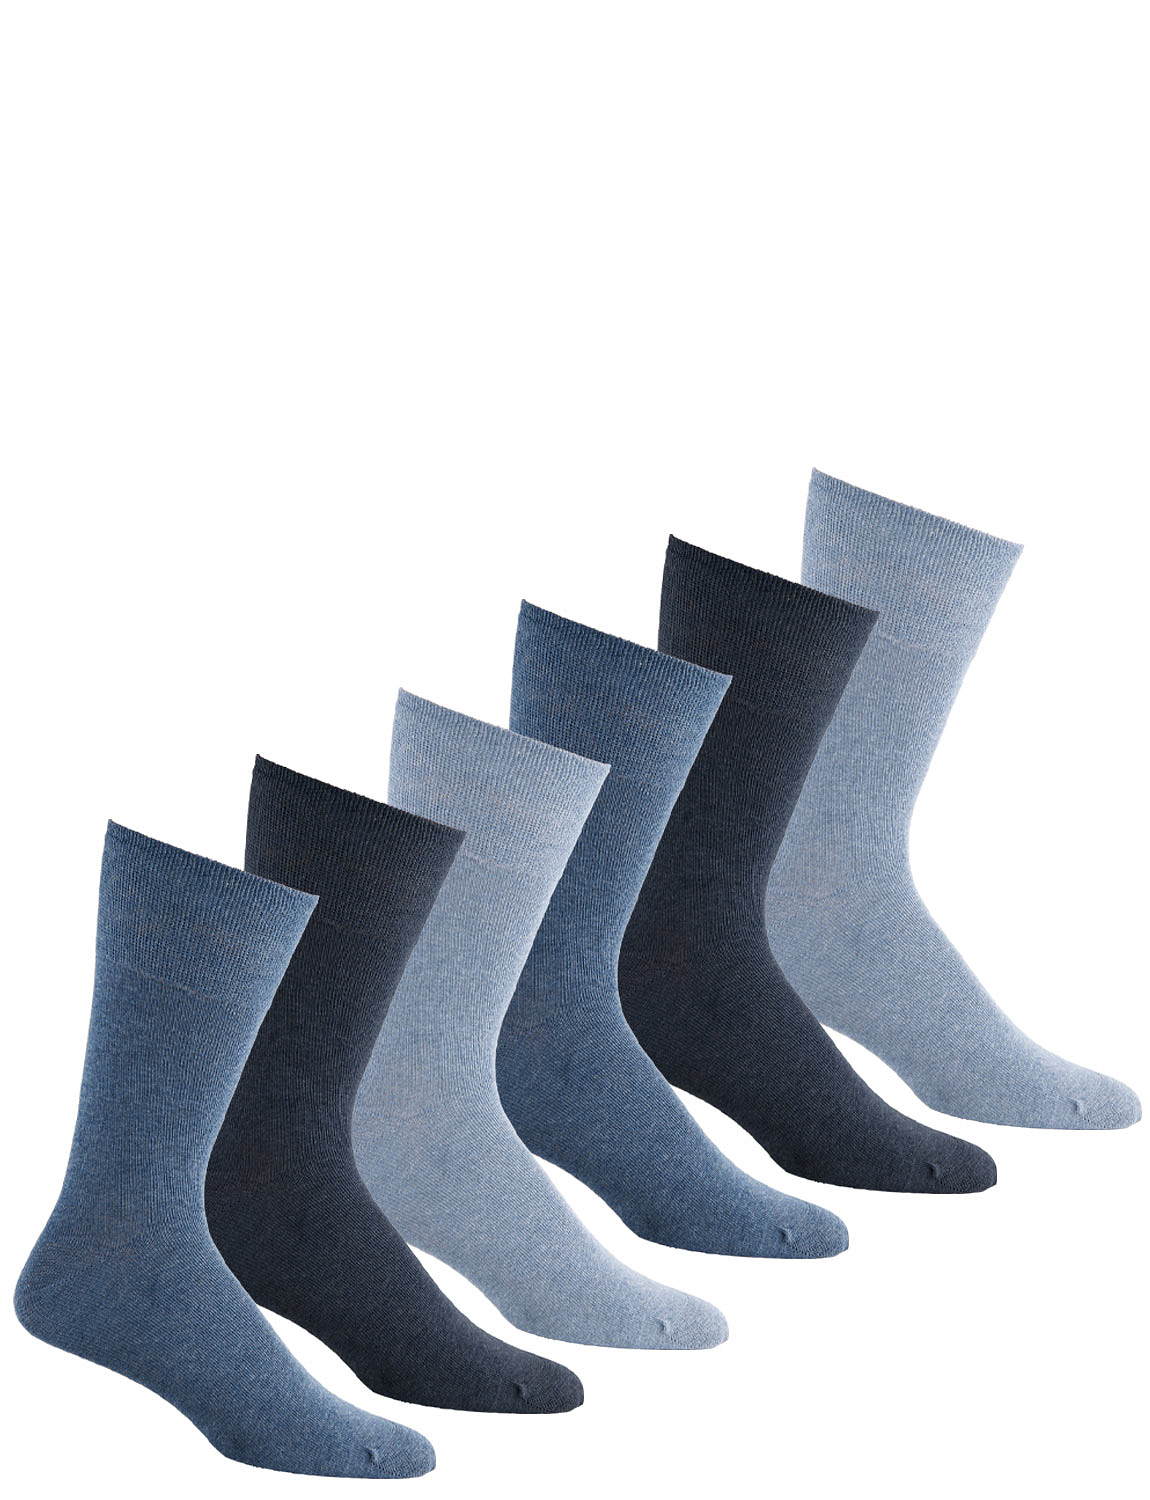 3 Pair Mens Gentle Grip Socks Non Elastic Soft Top Diabetic Fashion Uk 6-11